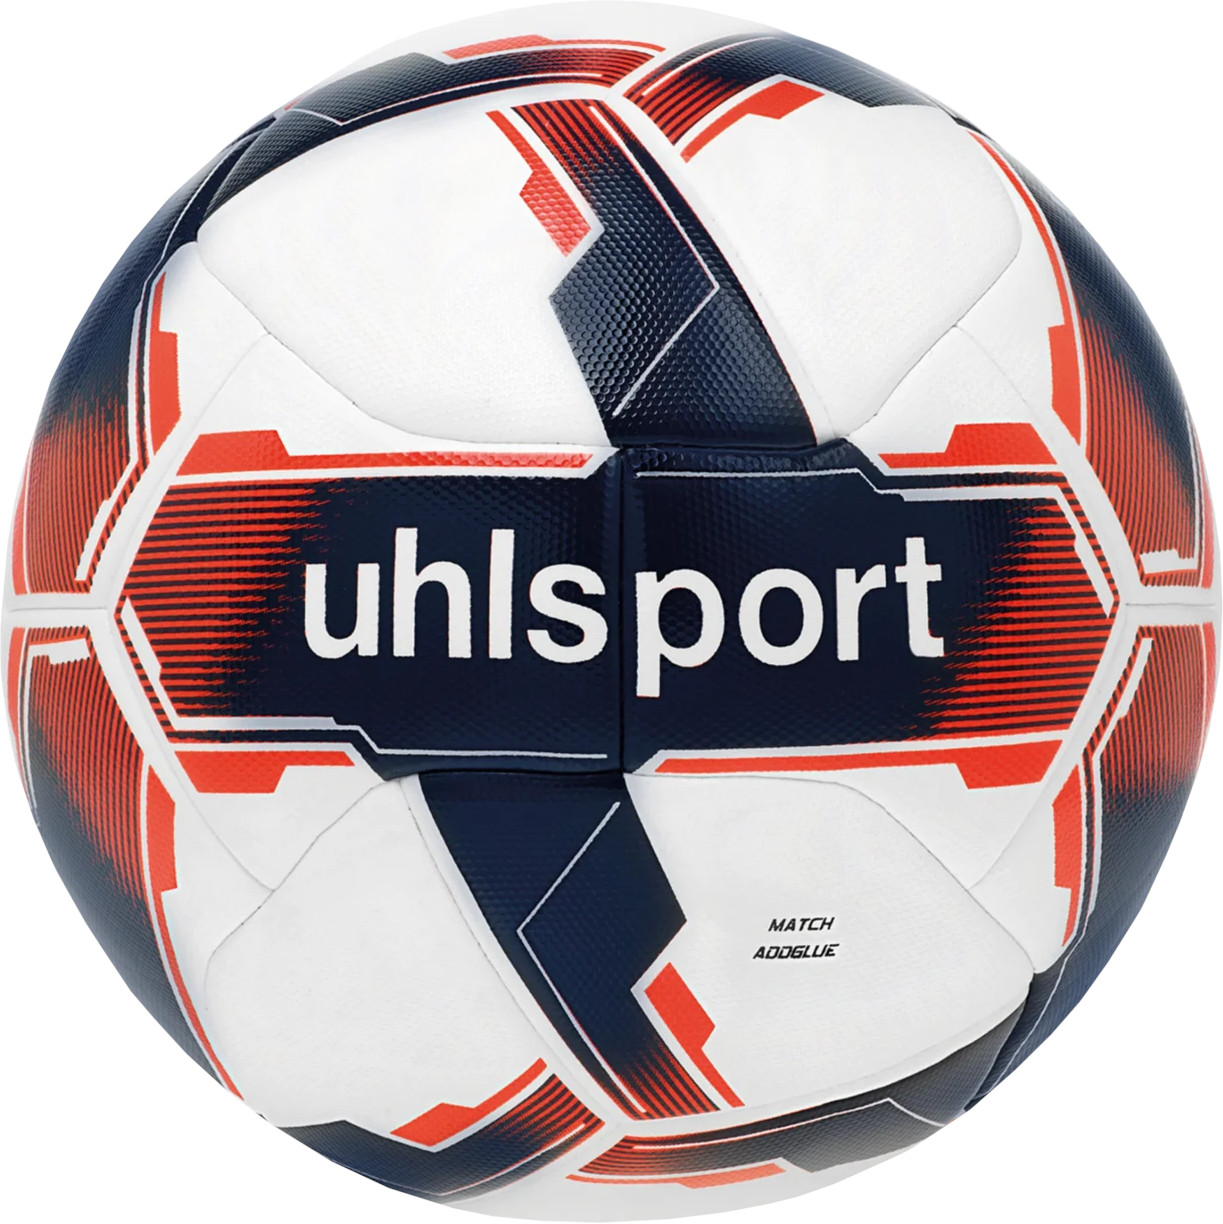 Uhlsport Addglue Match Ball Labda